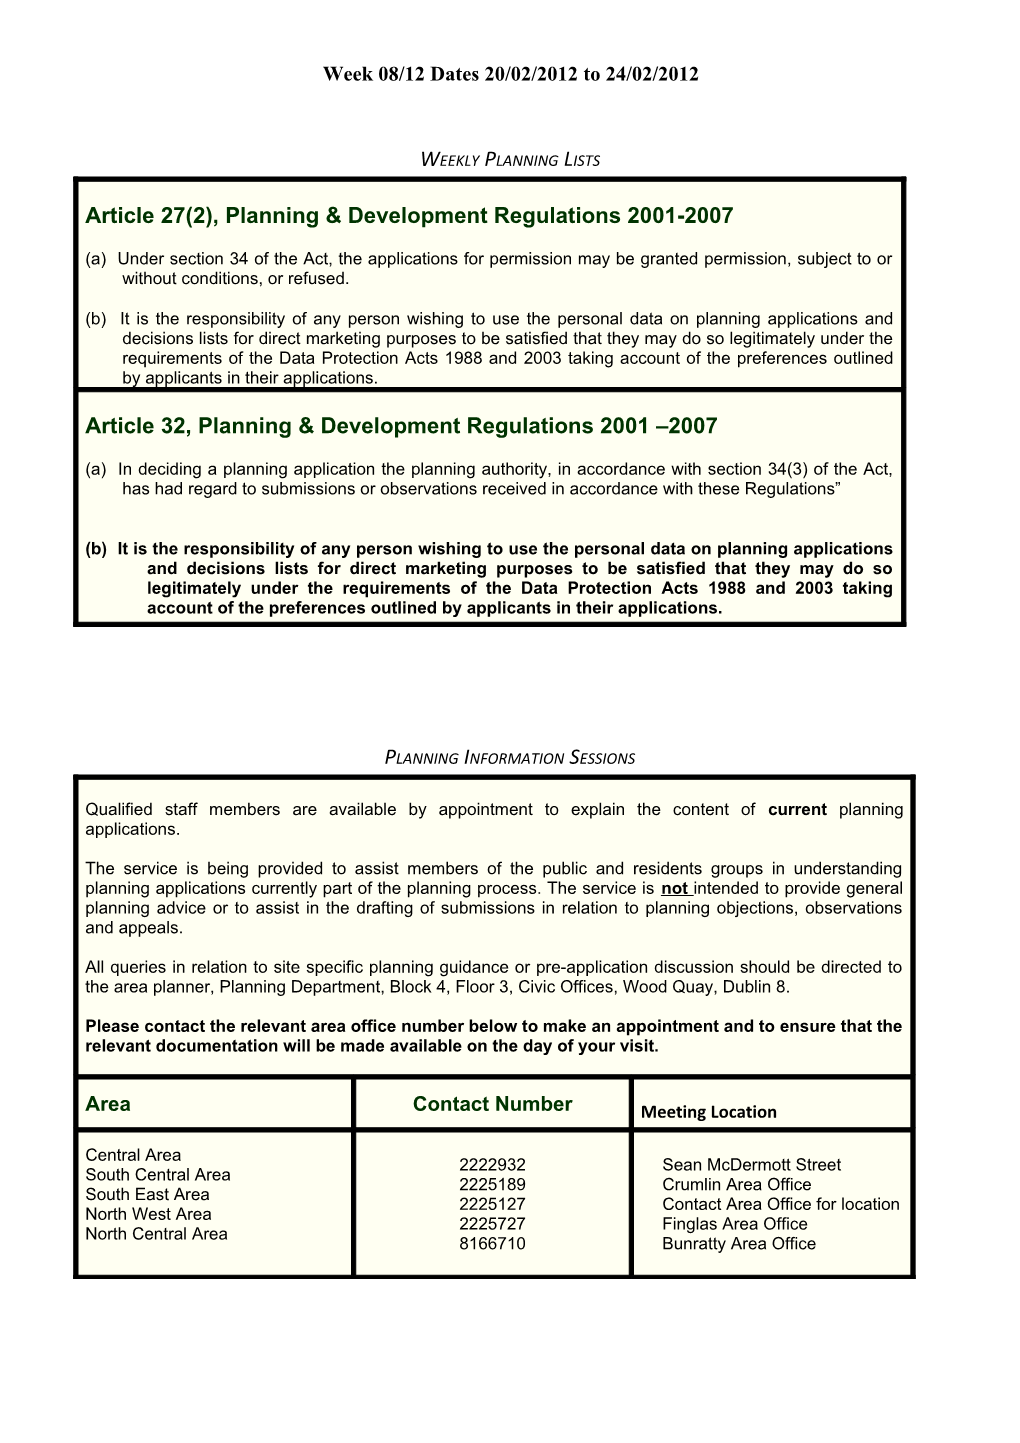 Article 27(2), Planning & Development Regulations 2001-2007 s1